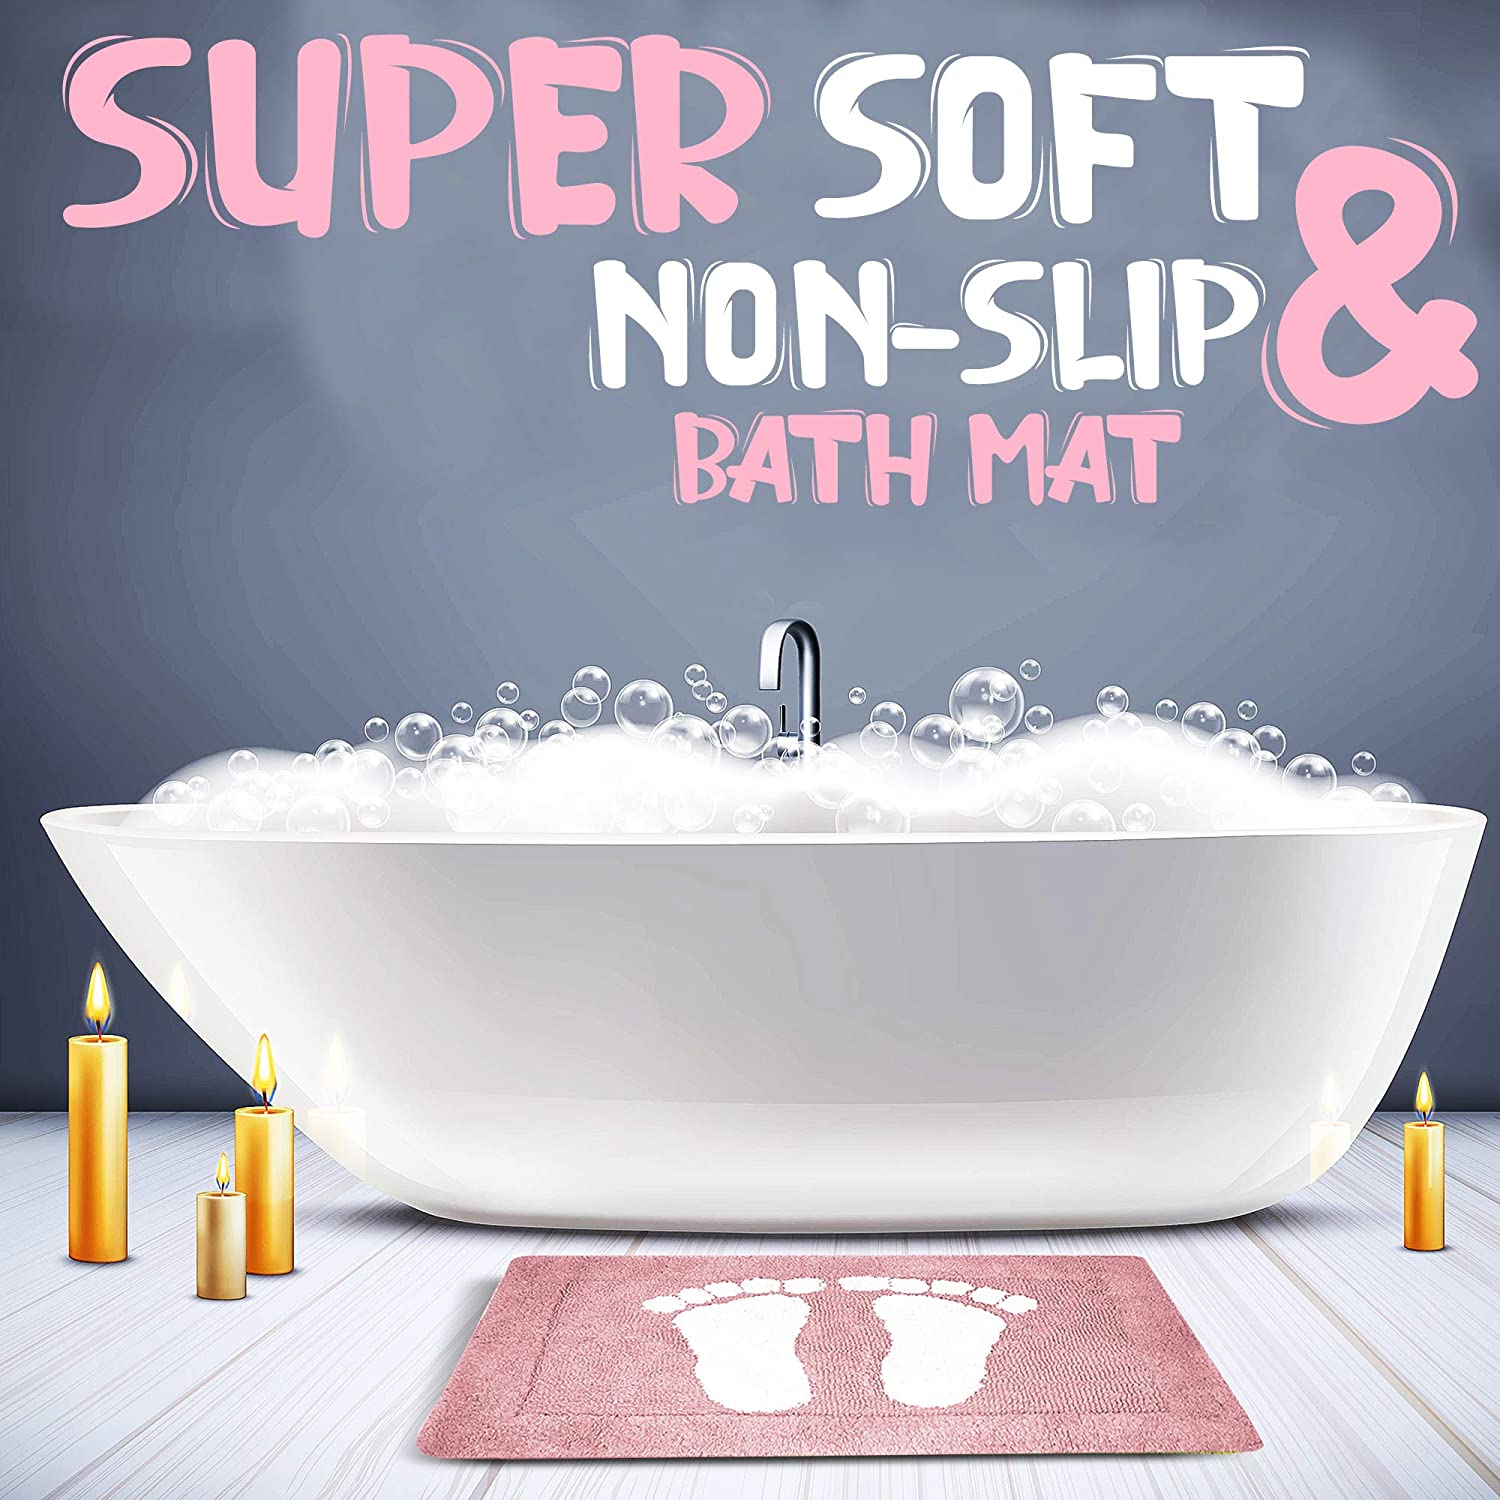 Cotton-Bath-Mats-2000gsm-Non-Slip-Pink